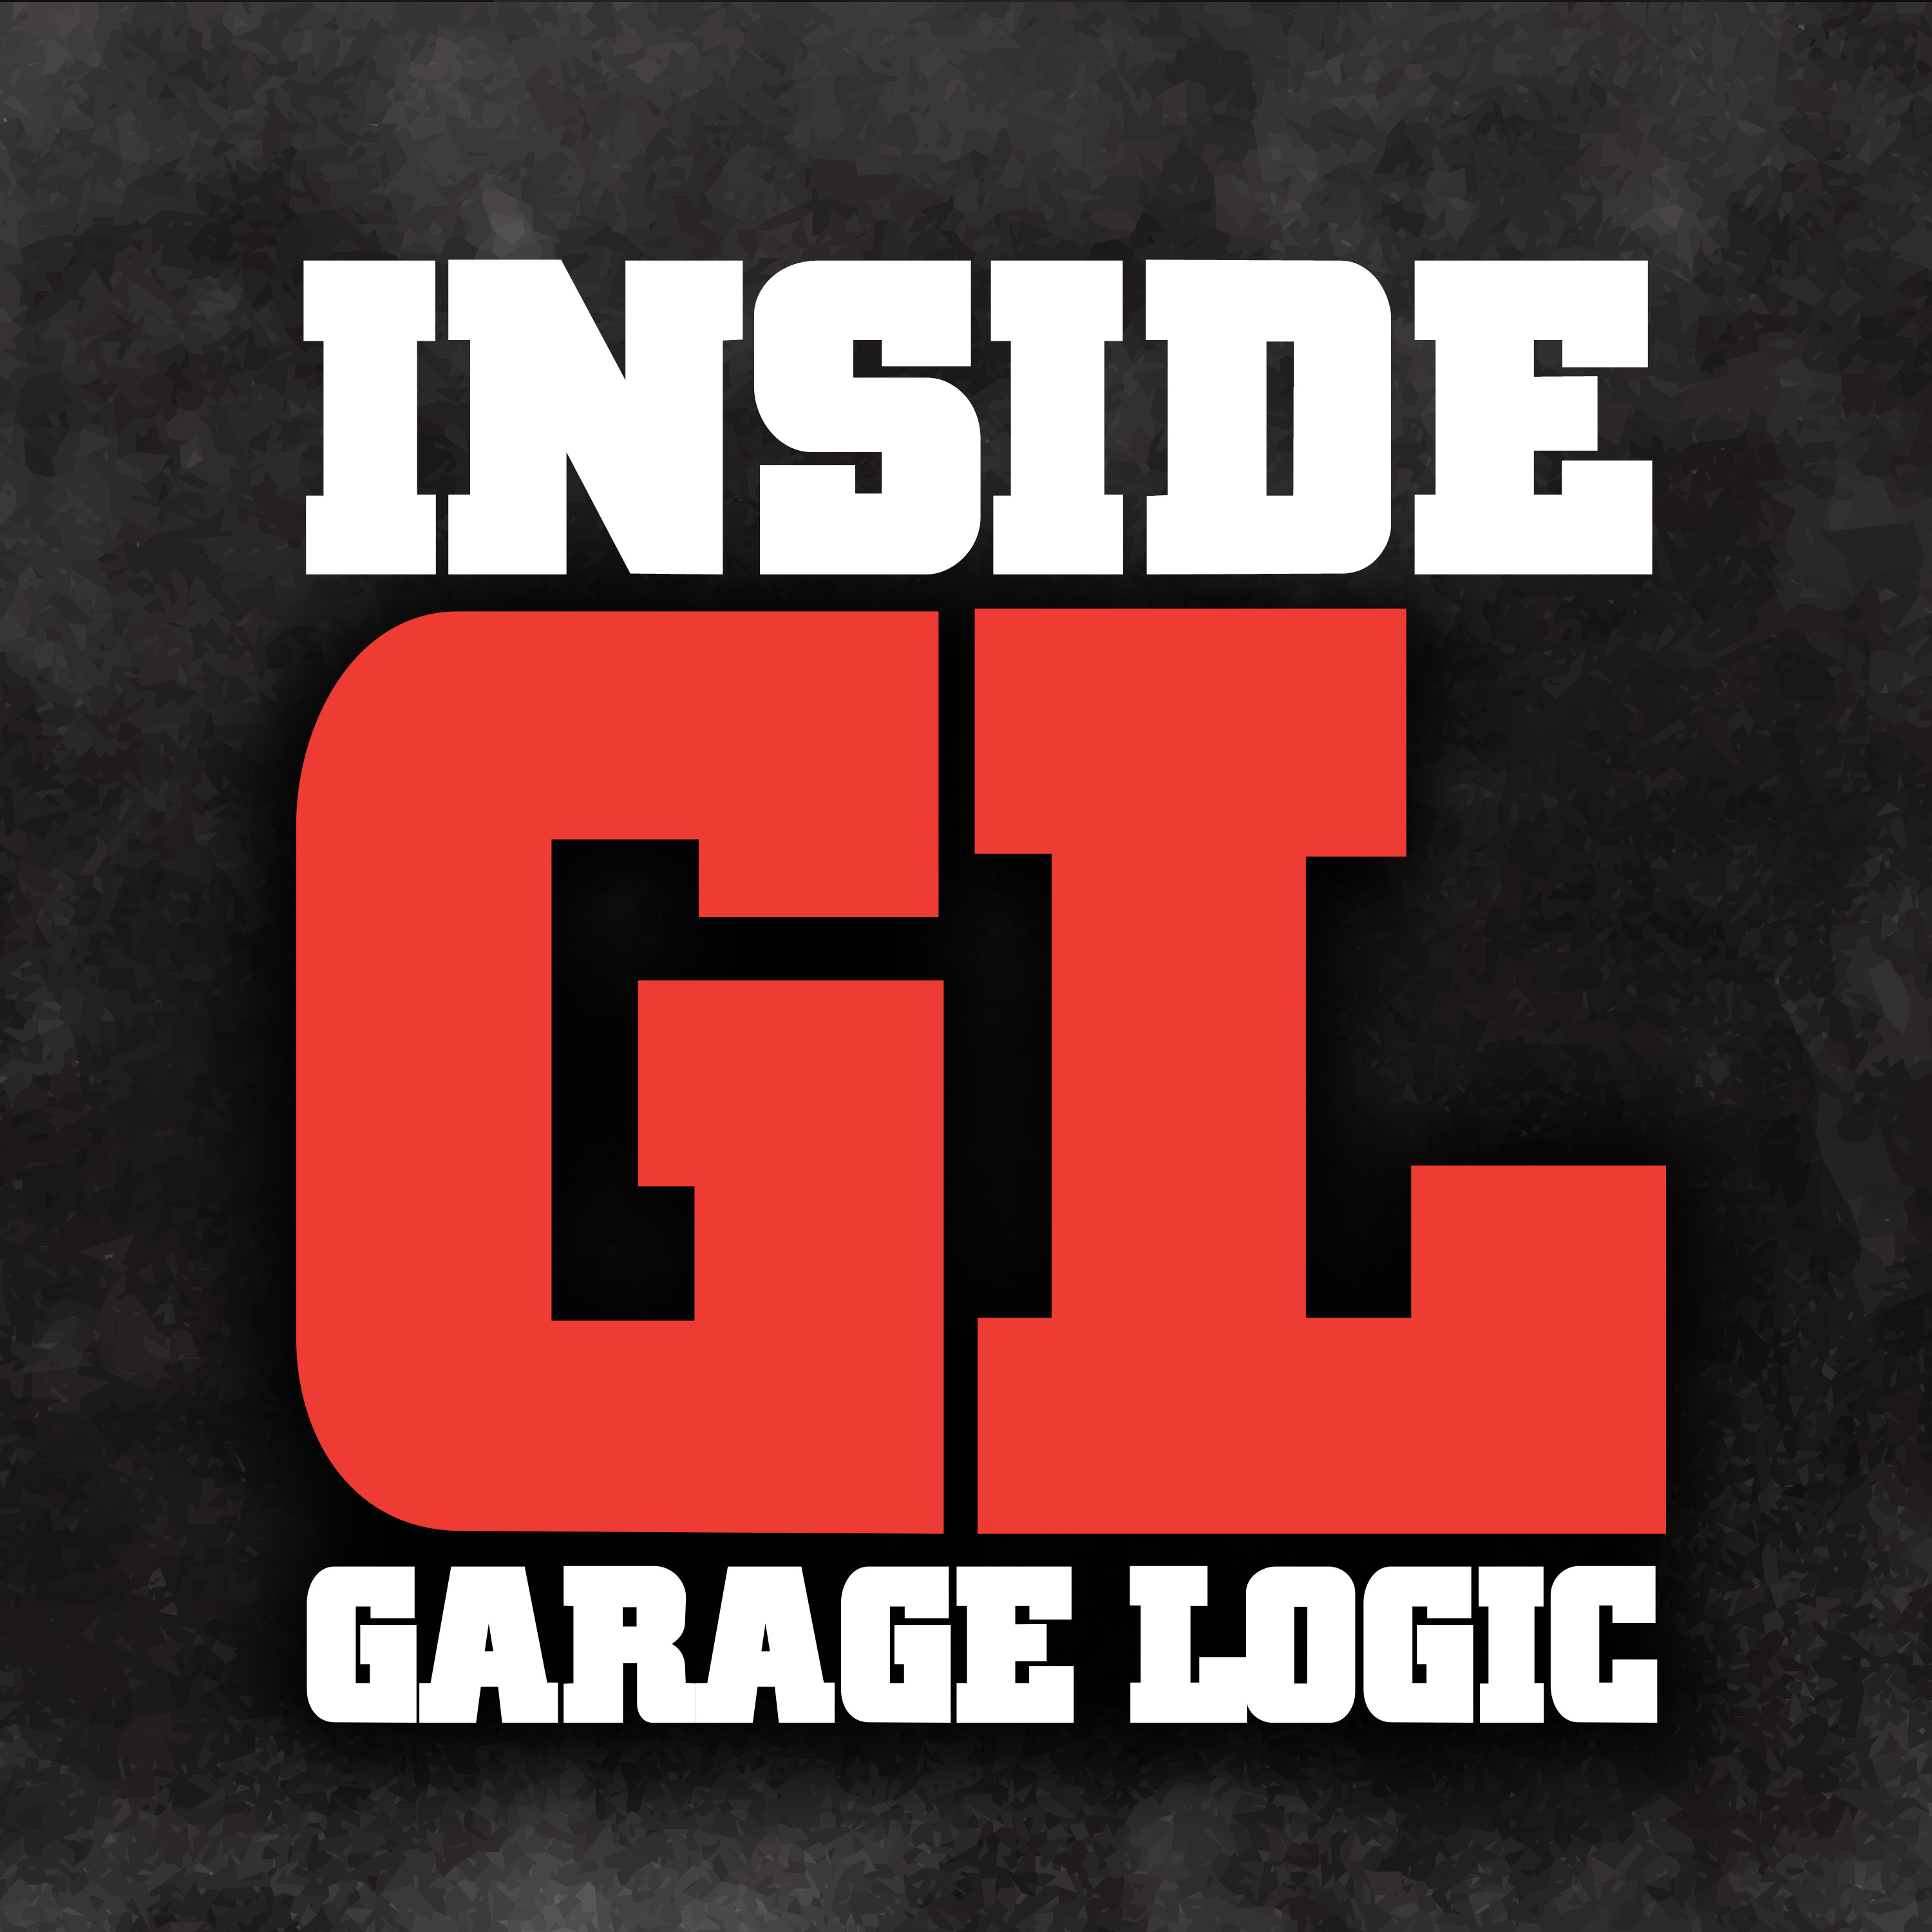 Inside Garage Logic